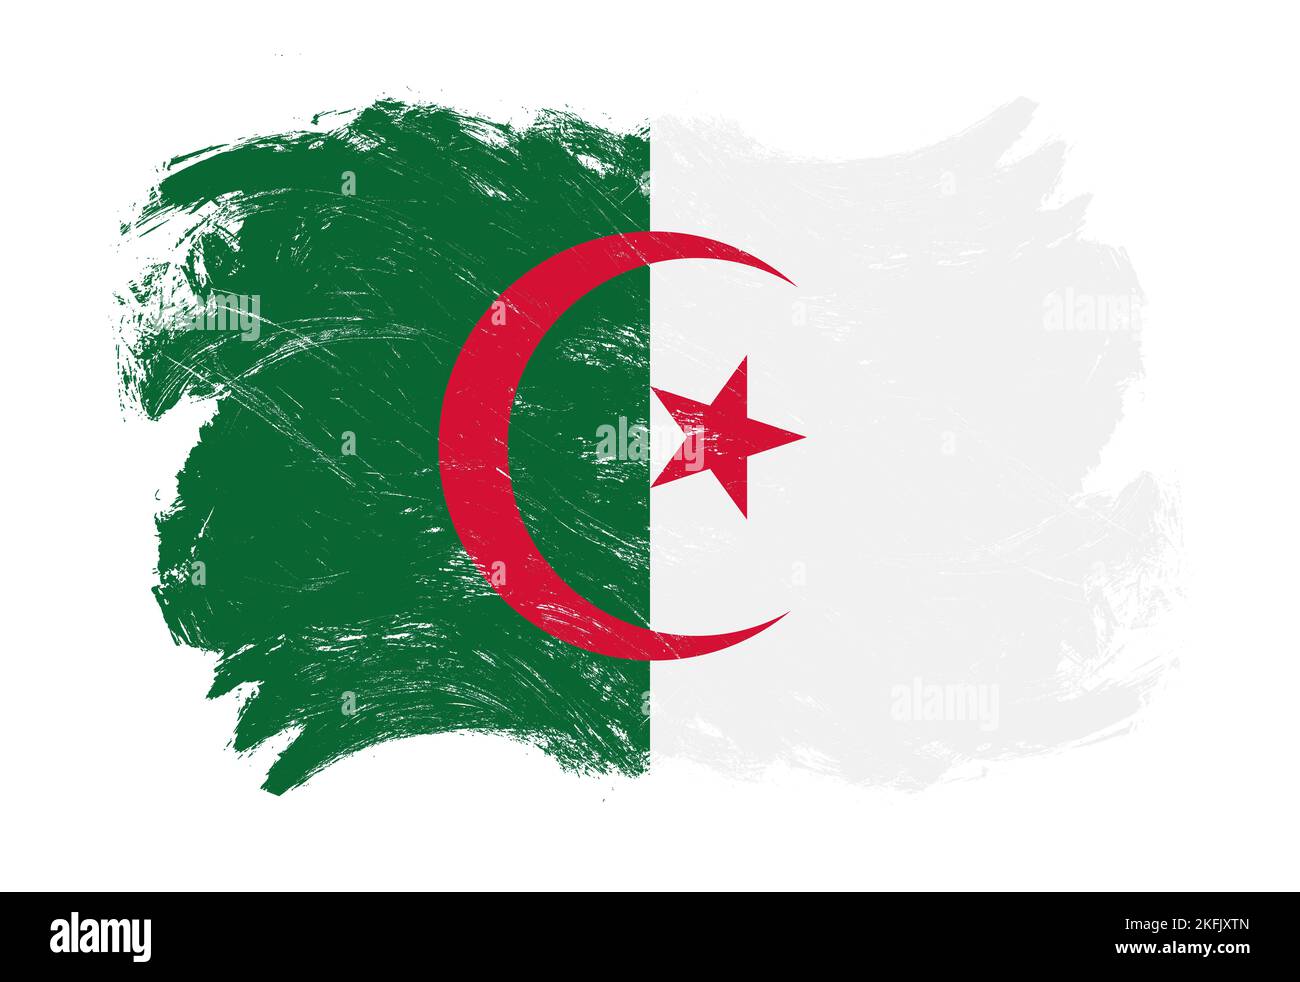 Algeria flag on distressed grunge white stroke brush background Stock Photo